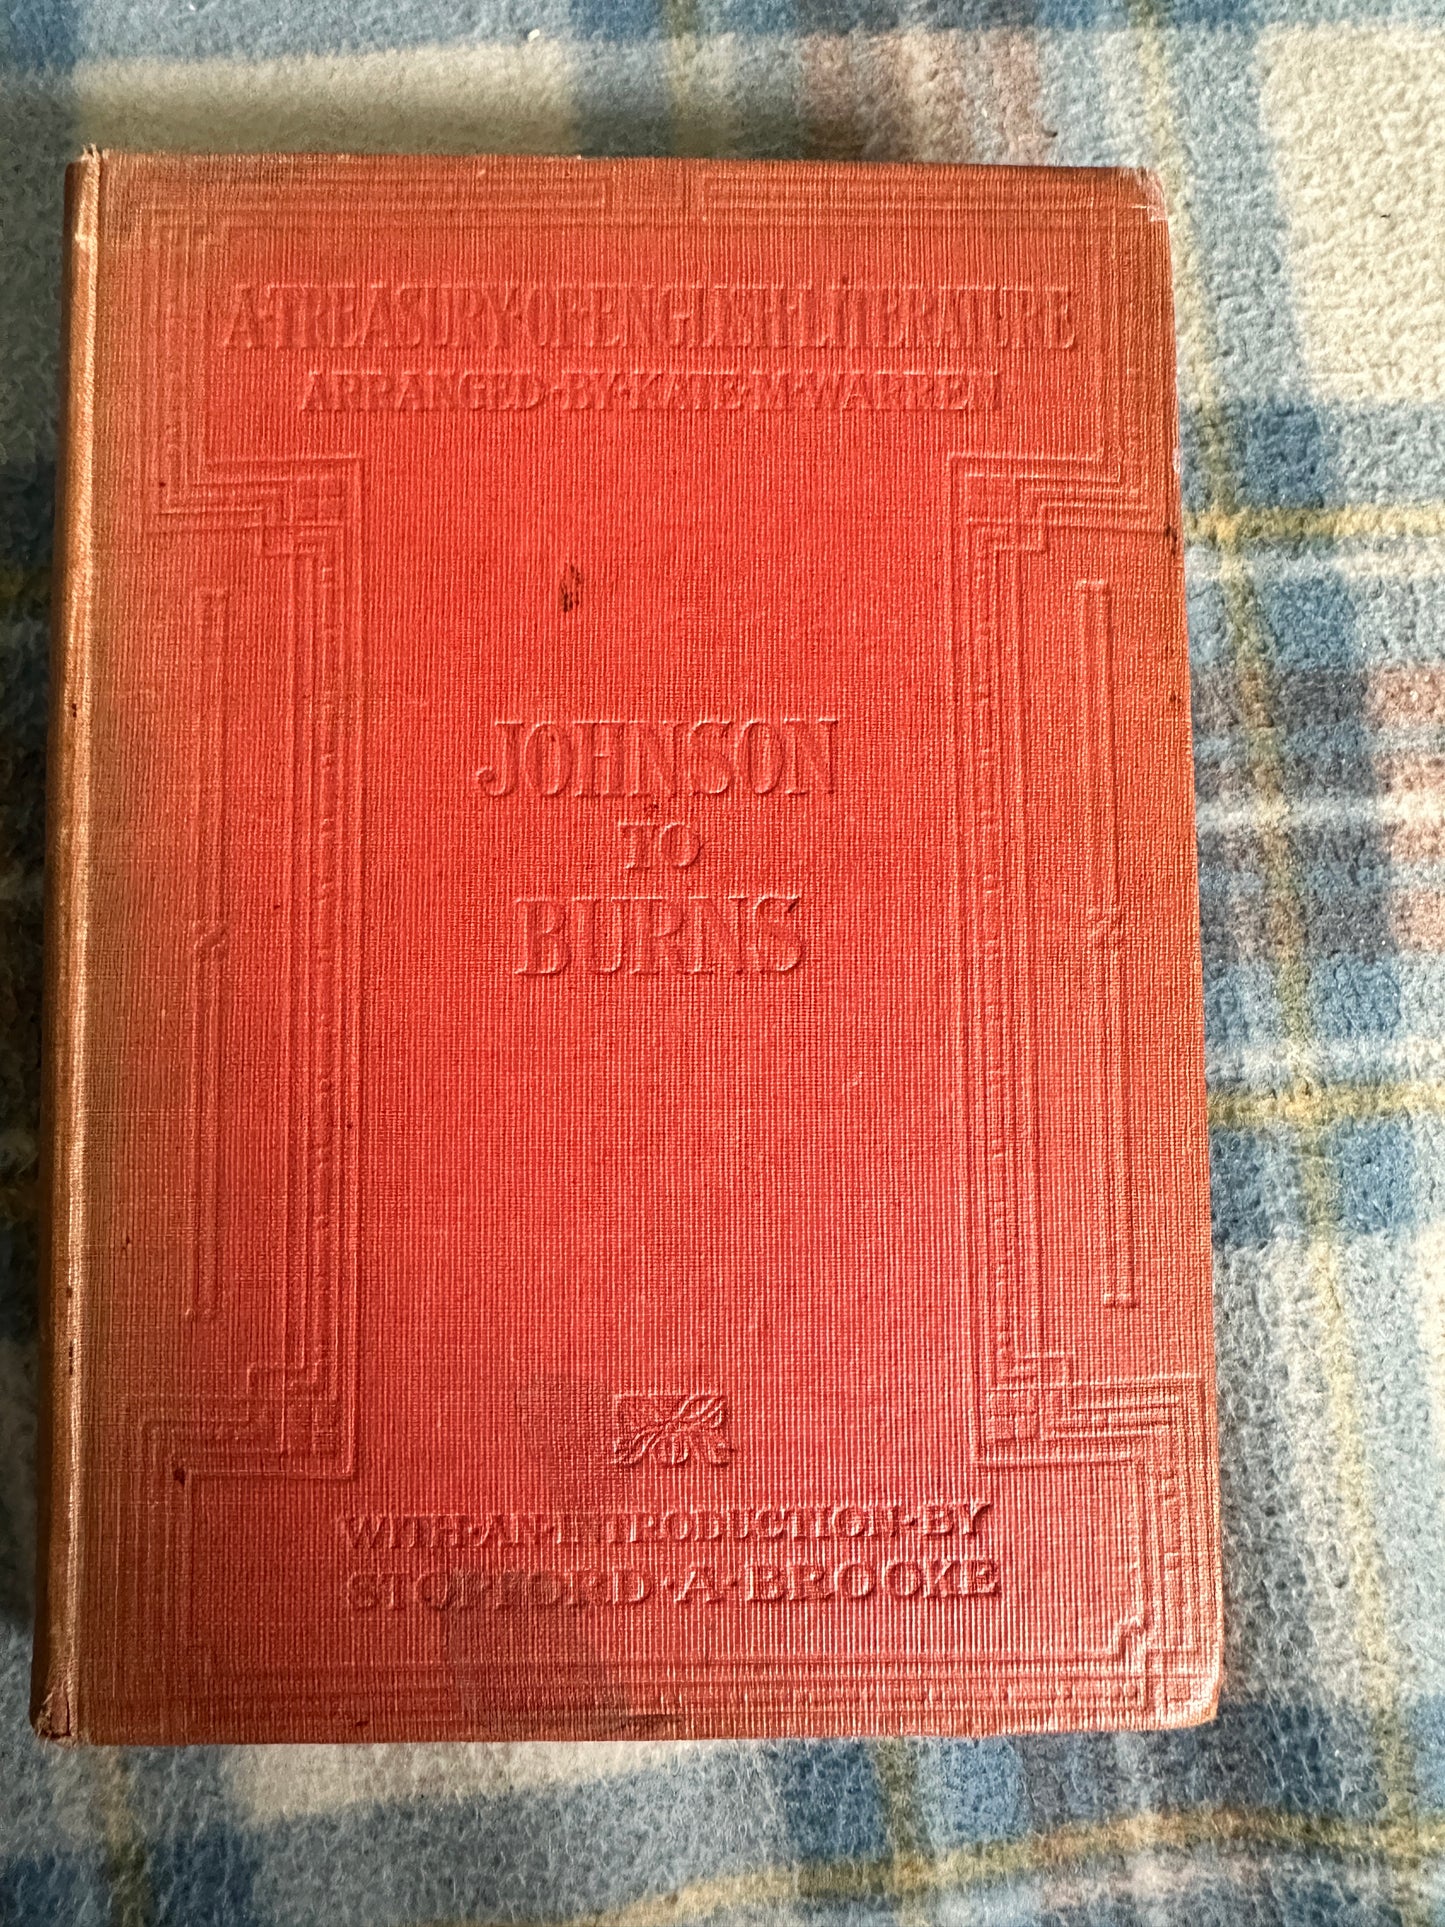 1908*1st* A Treasury Of English Language(Johnson to Burns) Kate Warren (Archibald Constable & Co Ltd)